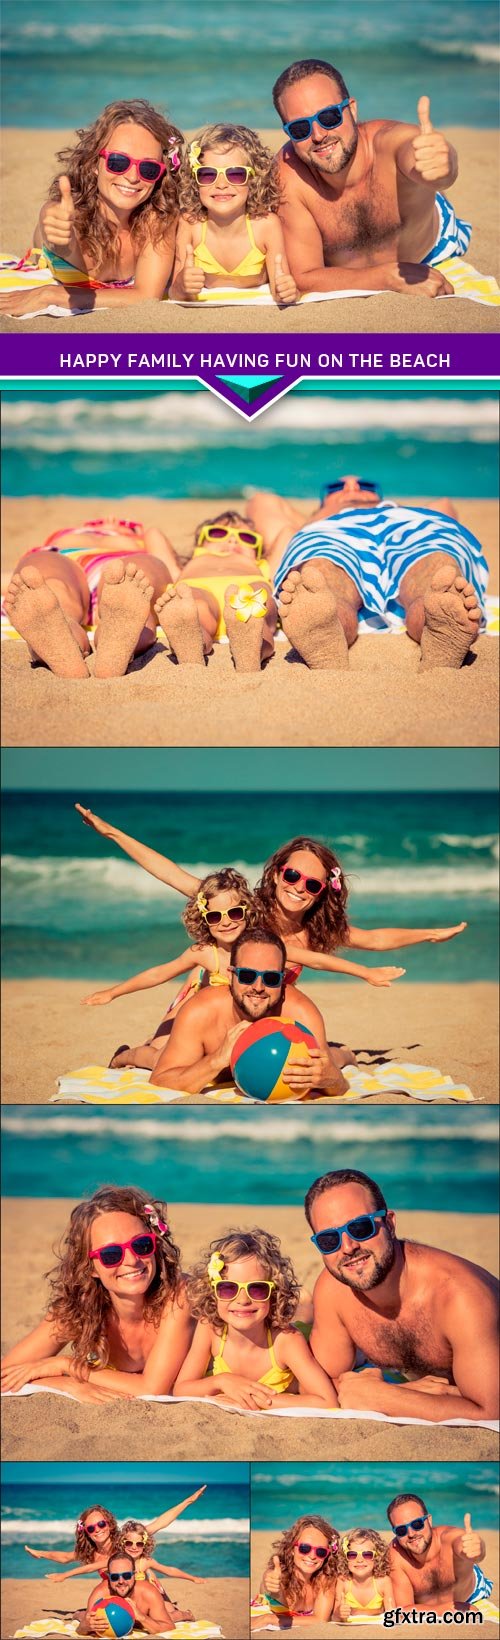 Happy family having fun on the beach 5x JPEG